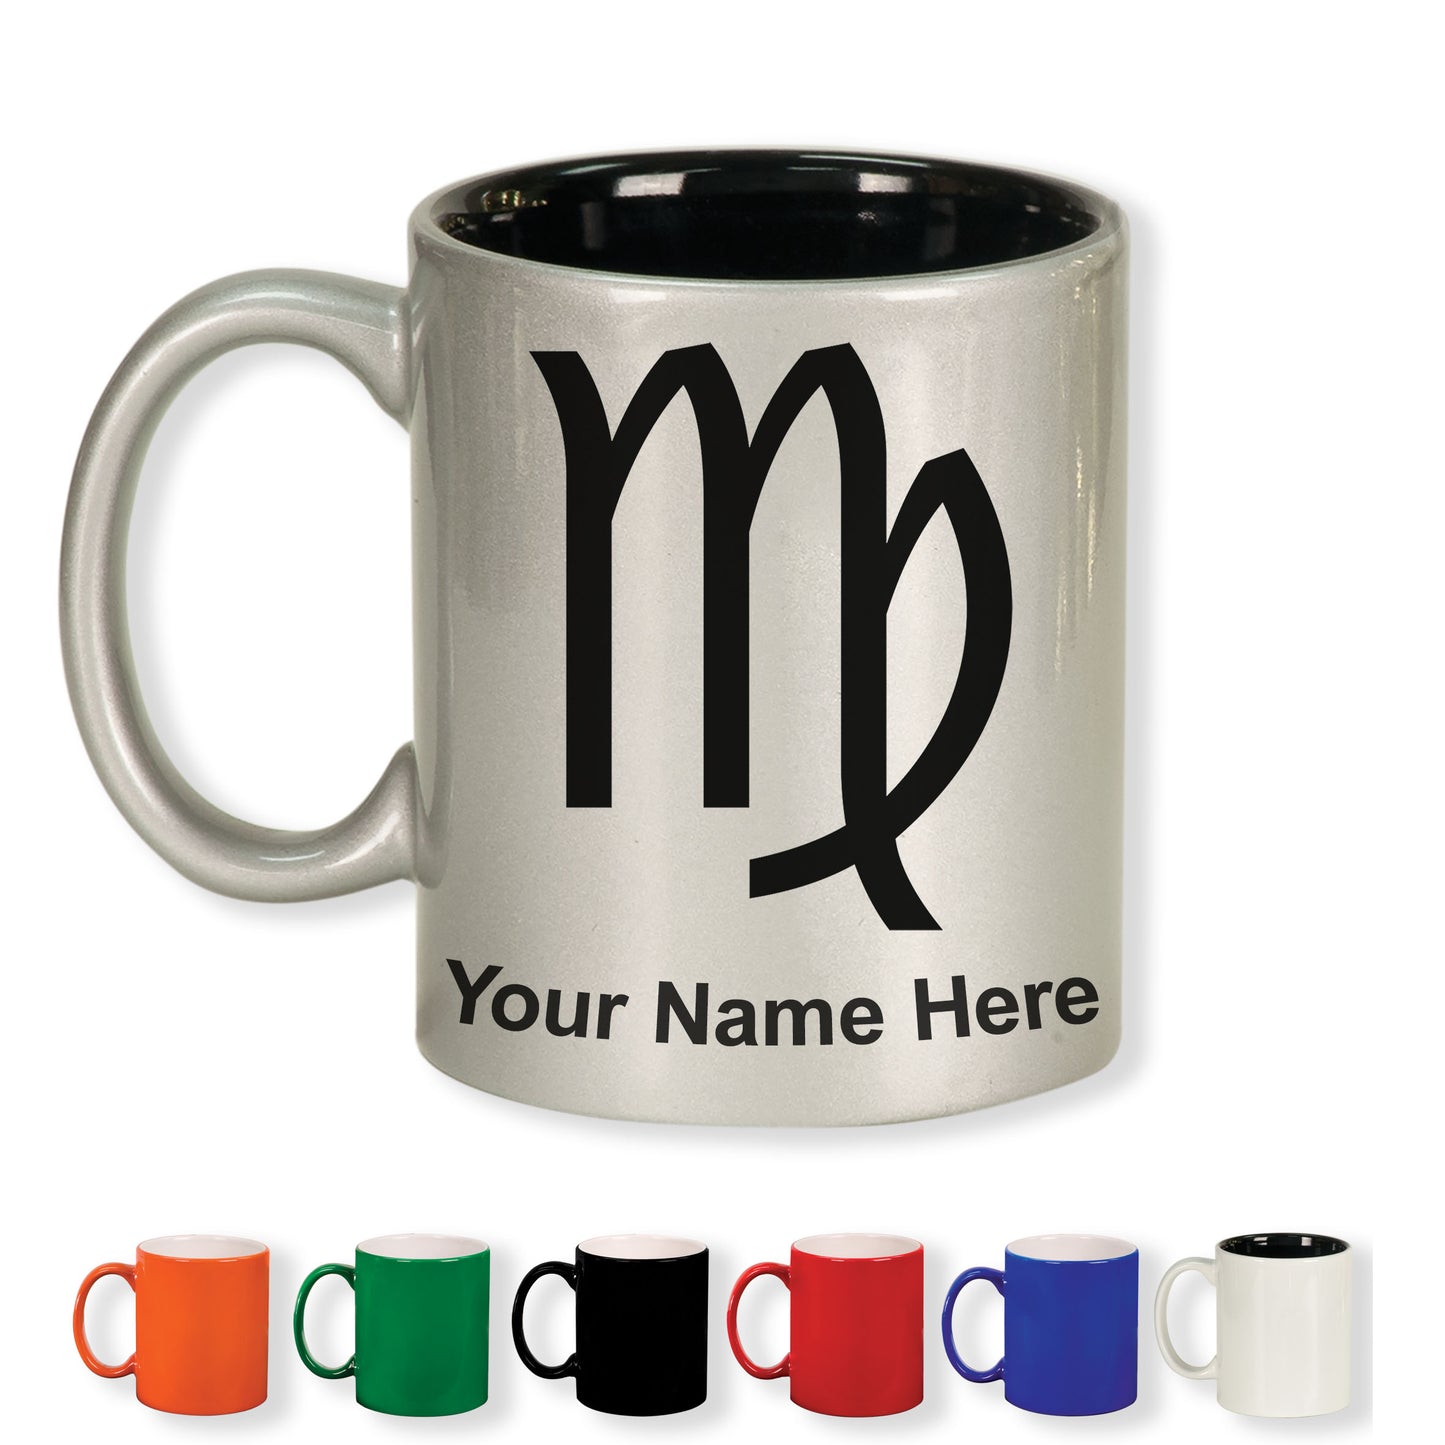 11oz Round Ceramic Coffee Mug, Zodiac Sign Virgo, Personalized Engraving Included